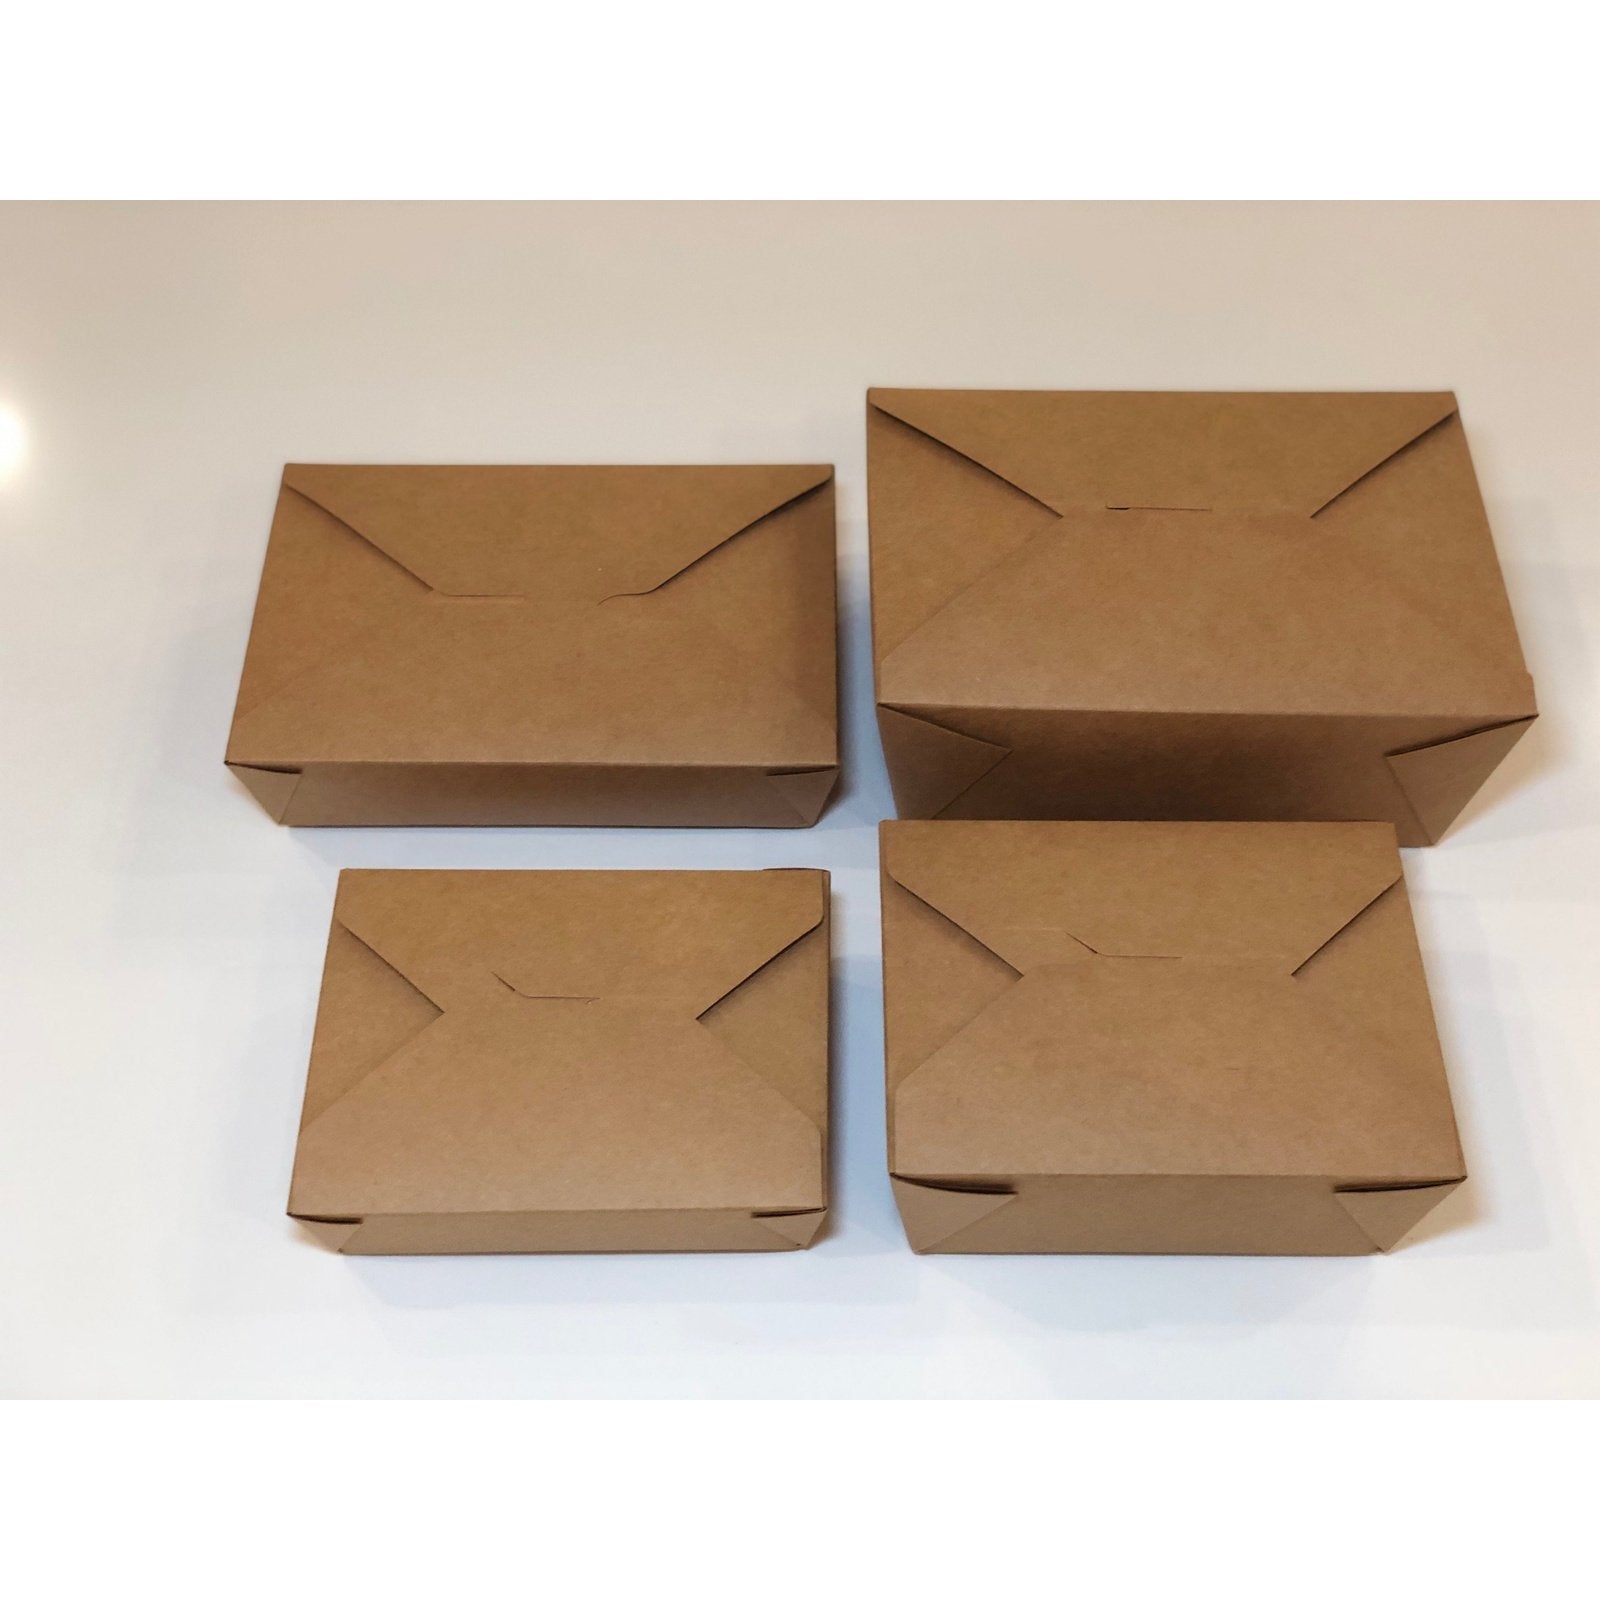 66 oz Recycled Kraft Paper Food Box